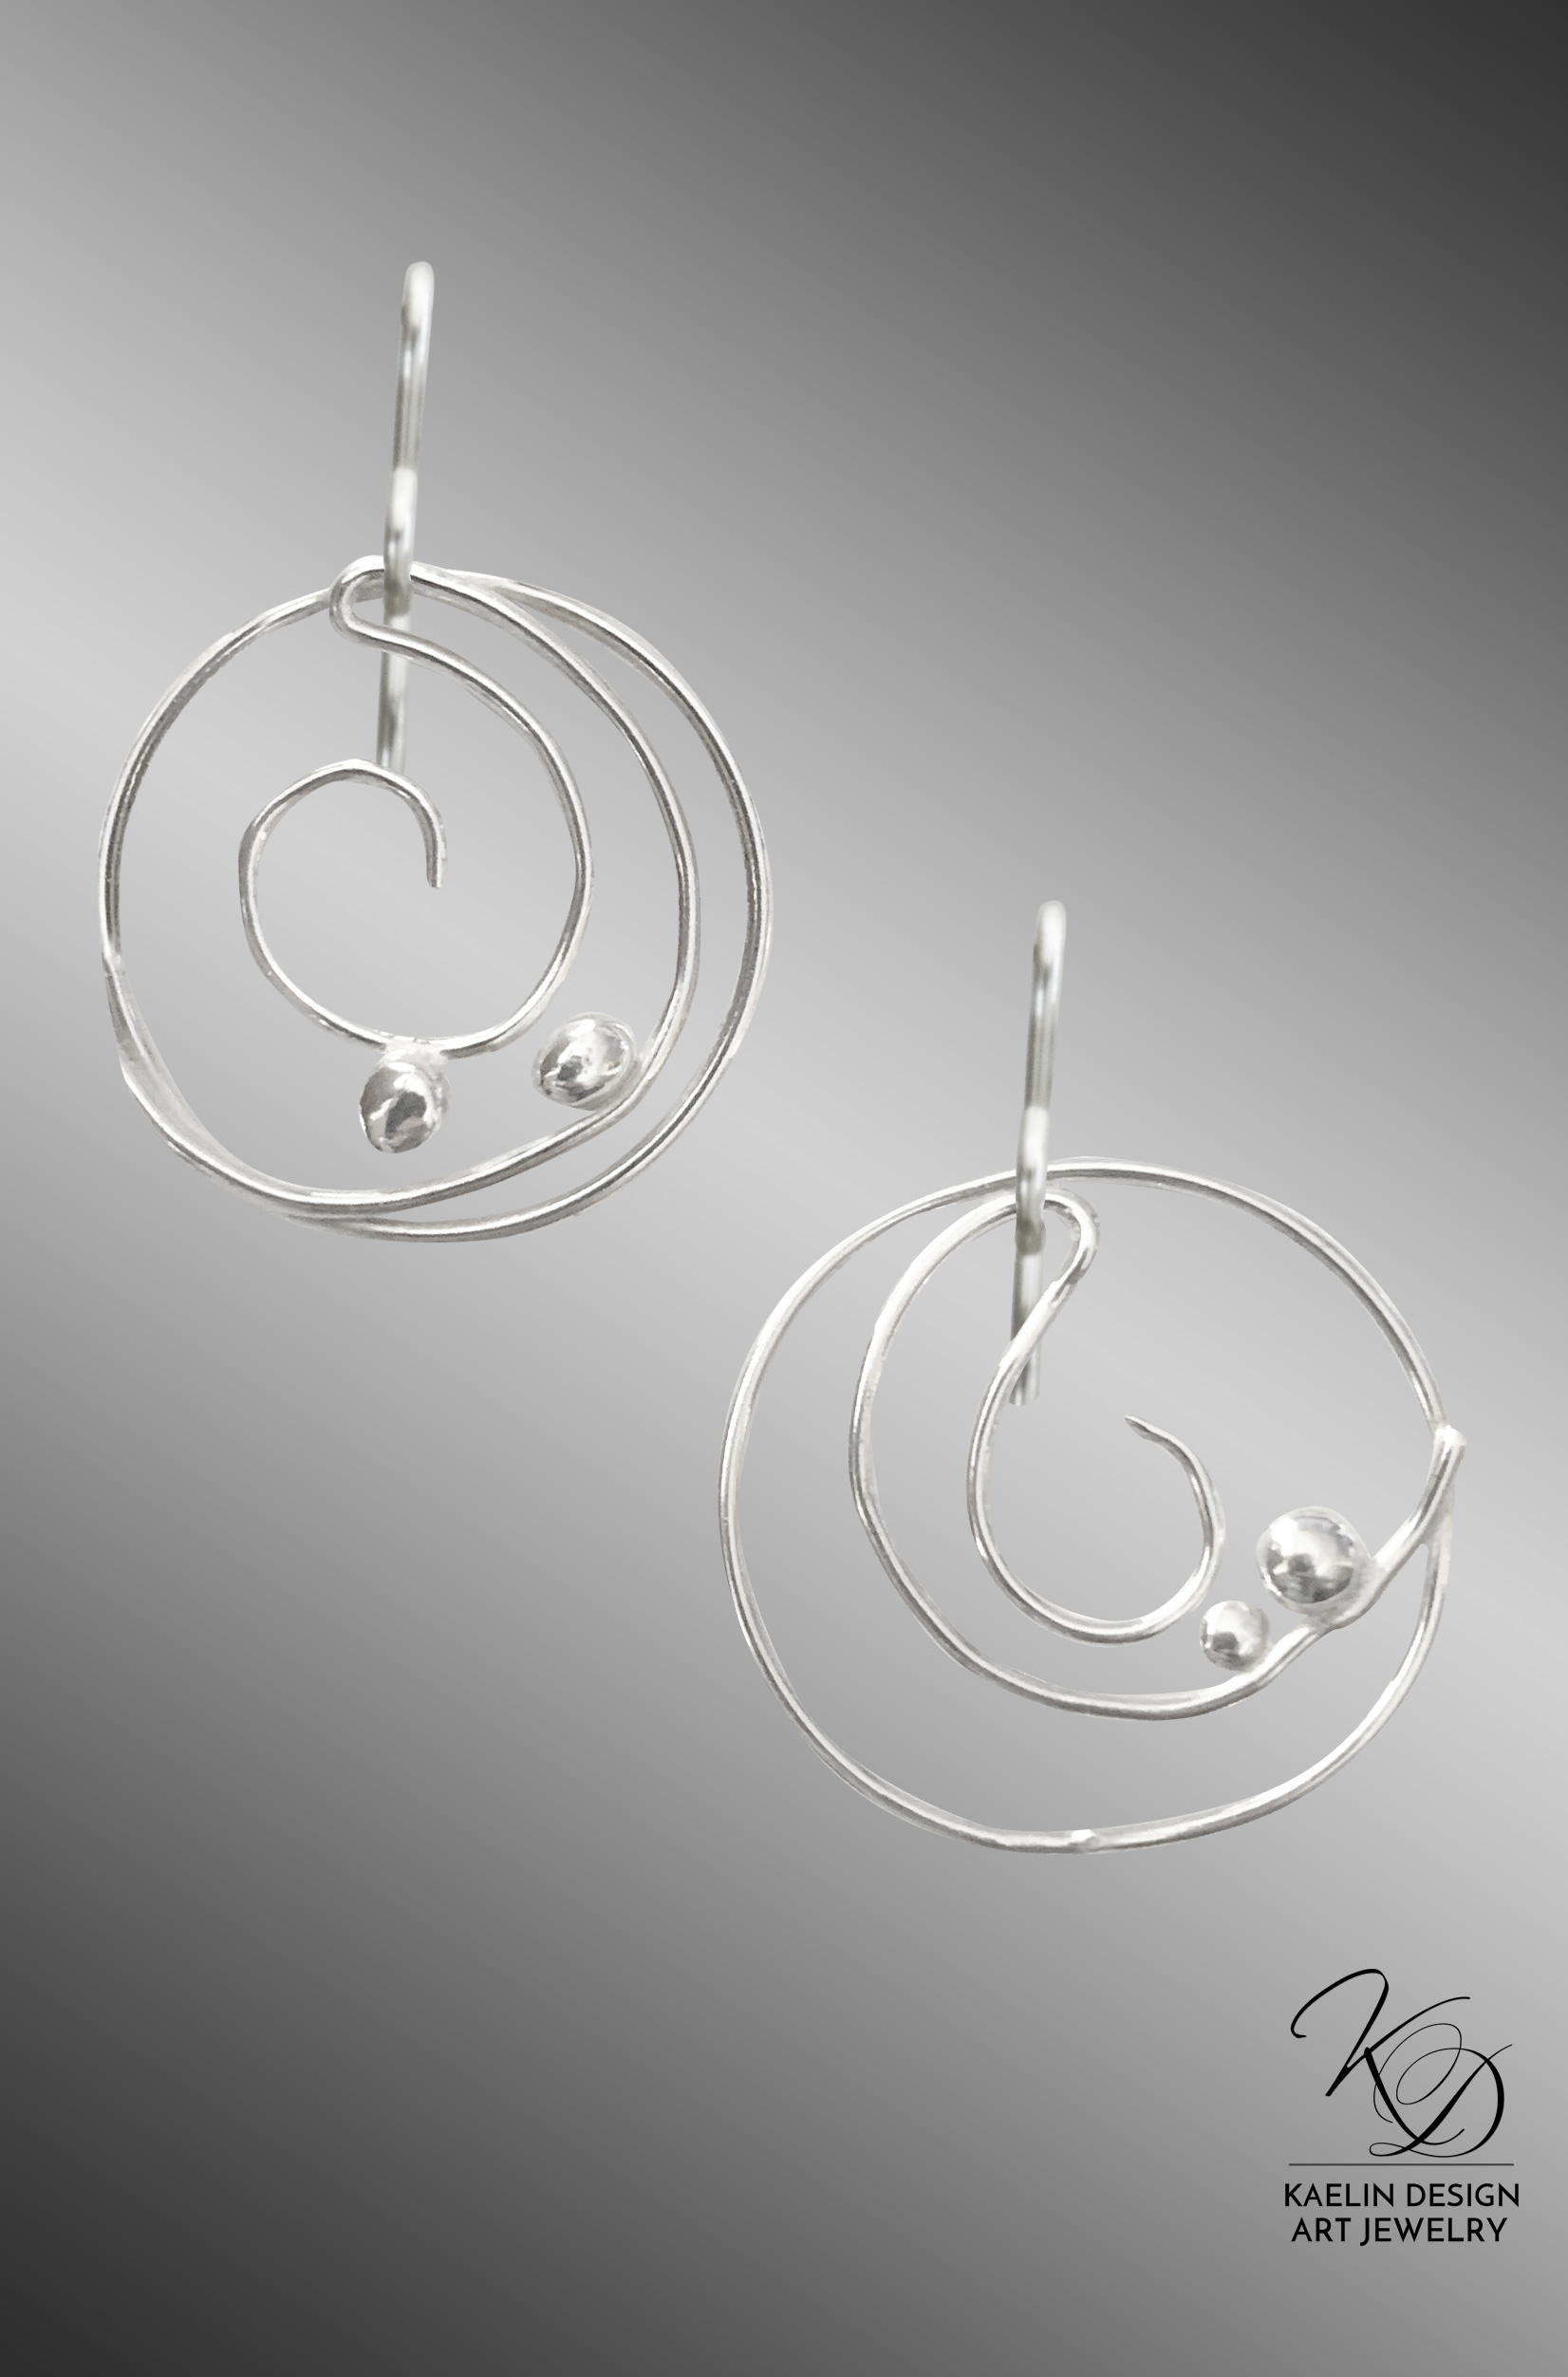 Delta Sterling Silver Hand Forged Art Jewelry Earrings by Kaelin Design